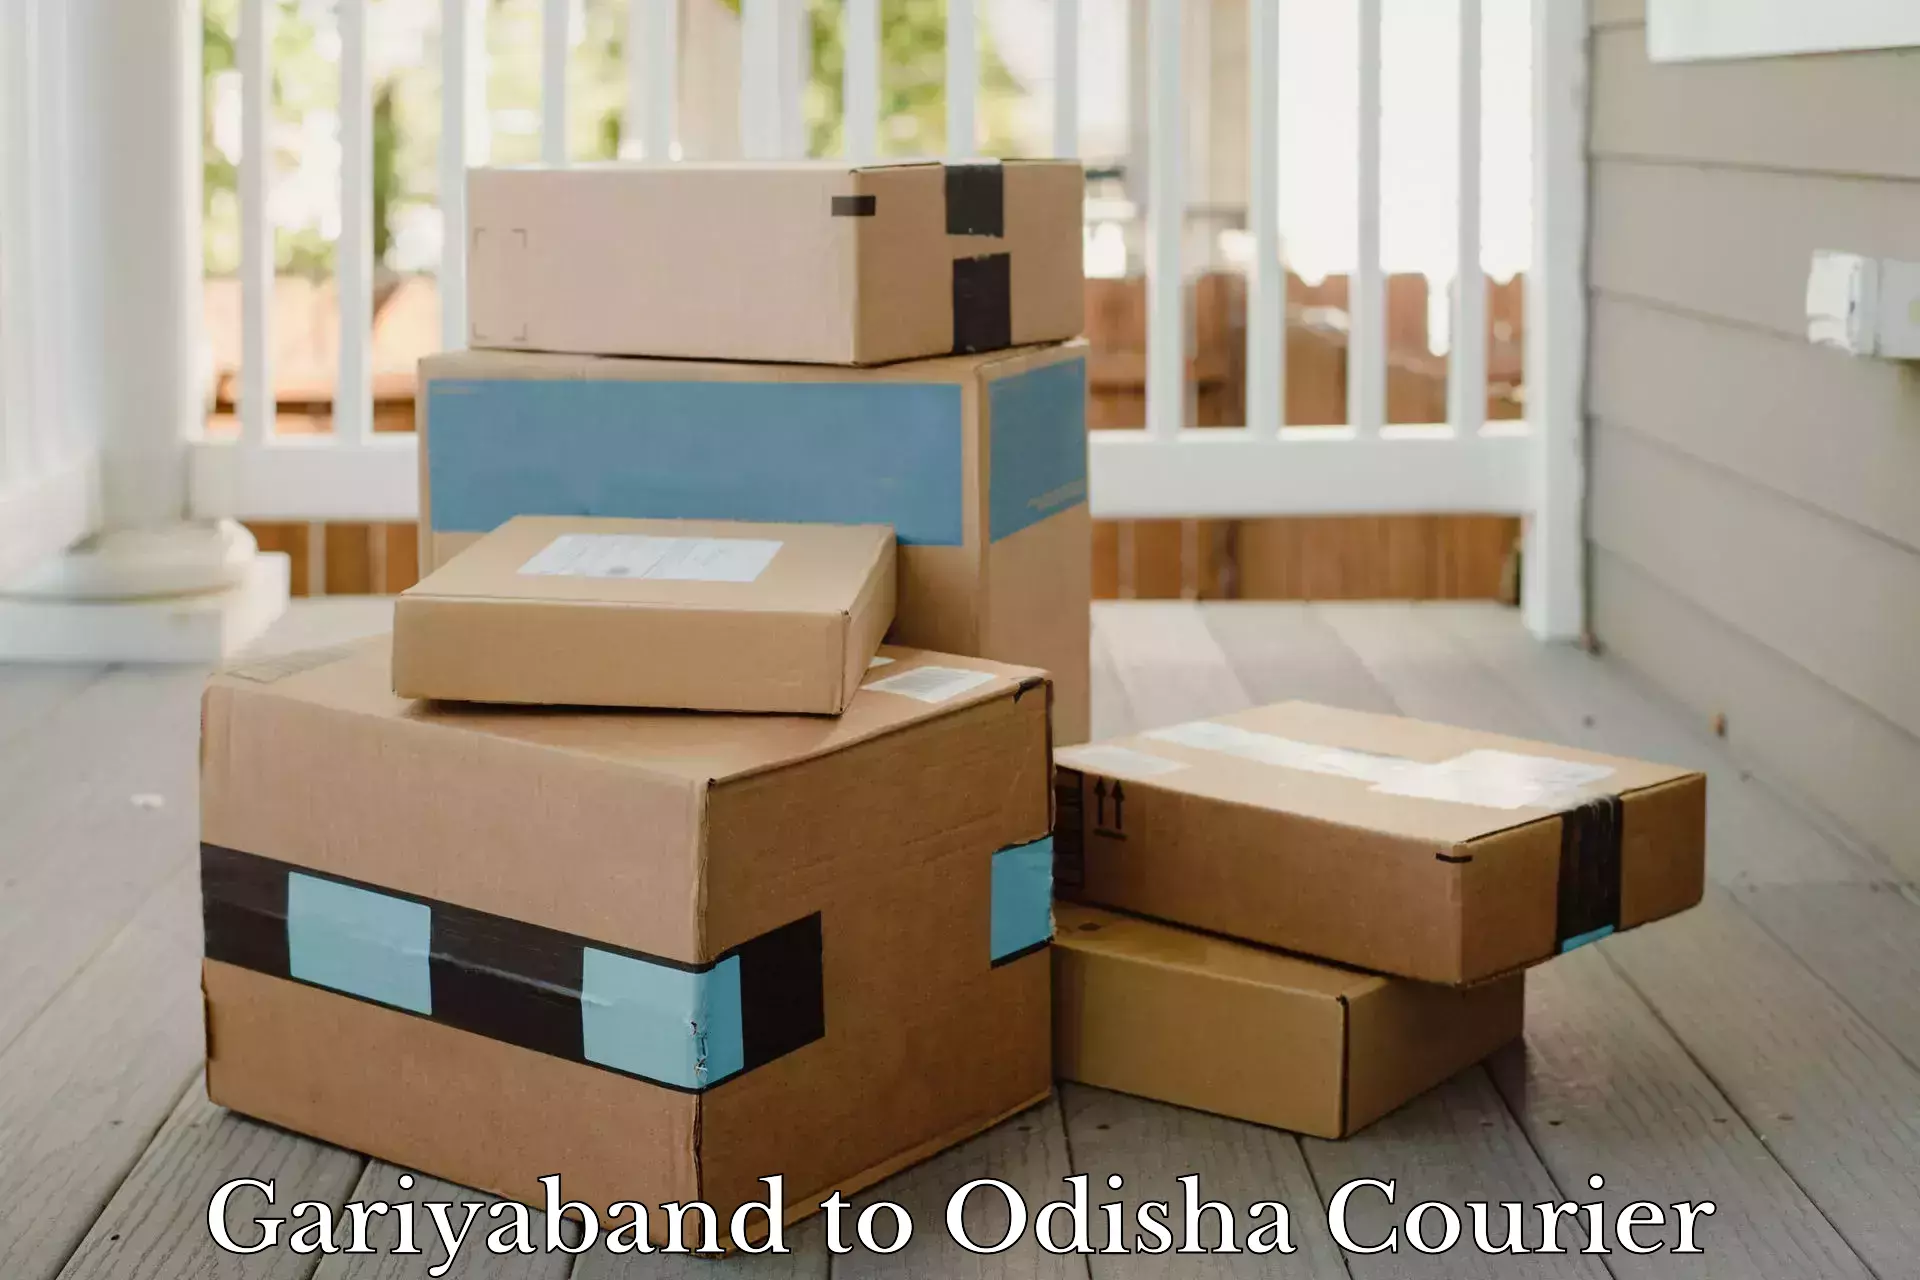 Express delivery capabilities Gariyaband to Odisha